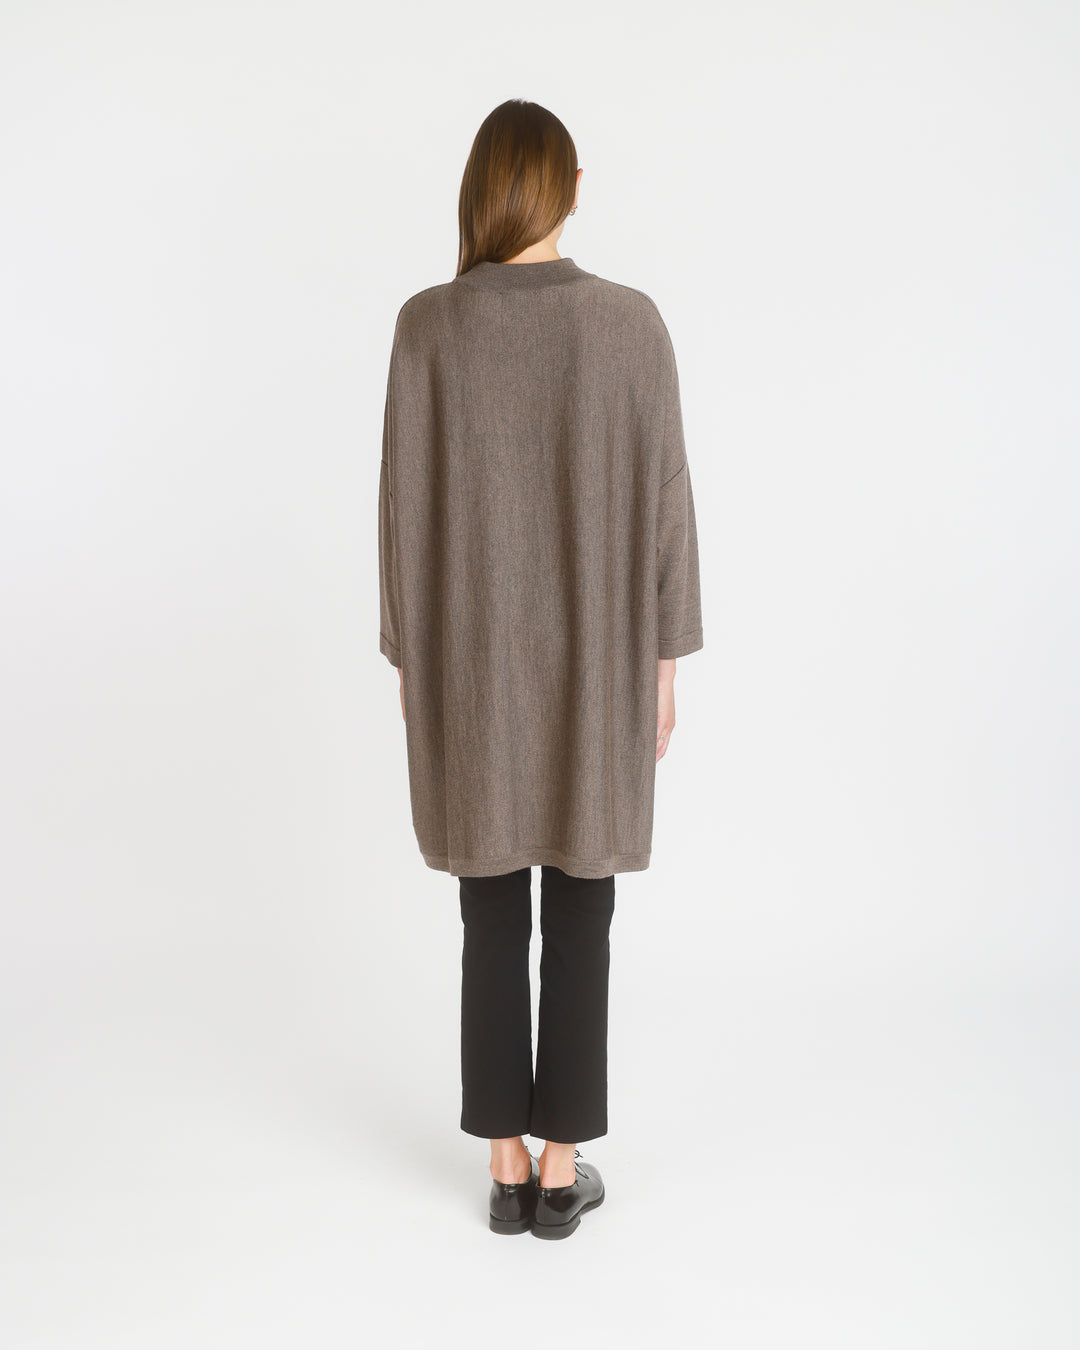 Vilna  Merino Sweater Tunic. Taupe. One Size. Final Sale